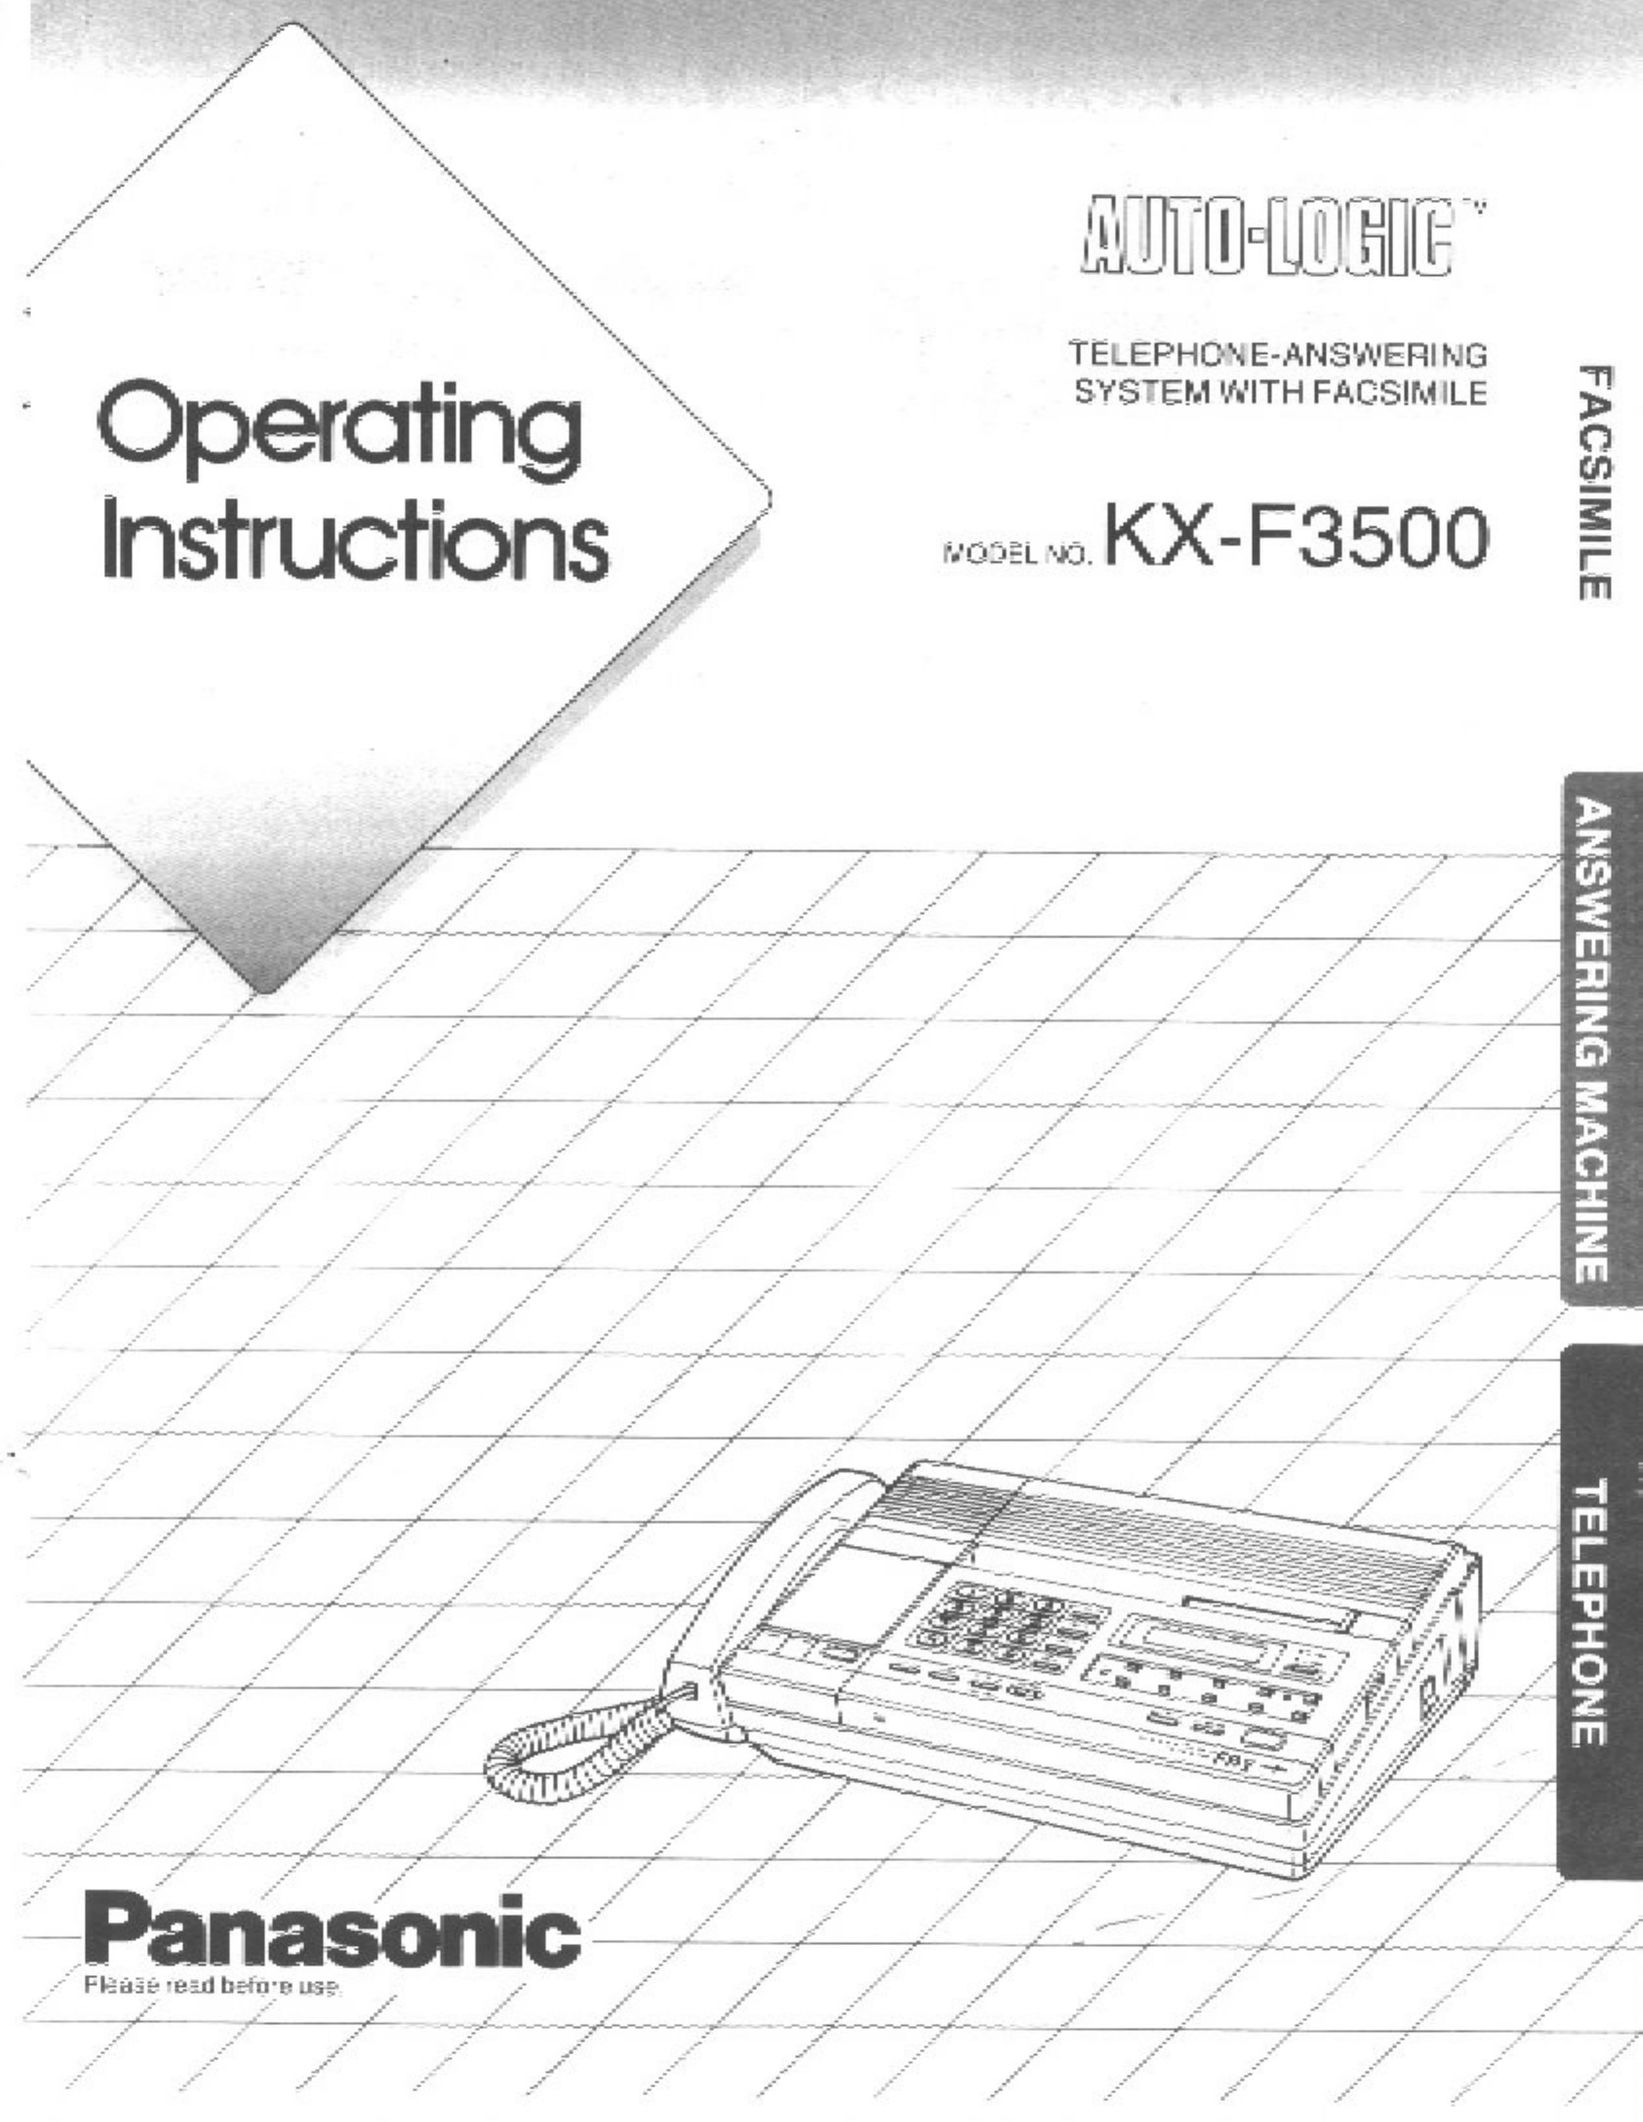 Panasonic KX-F3500 Answering Machine User Manual